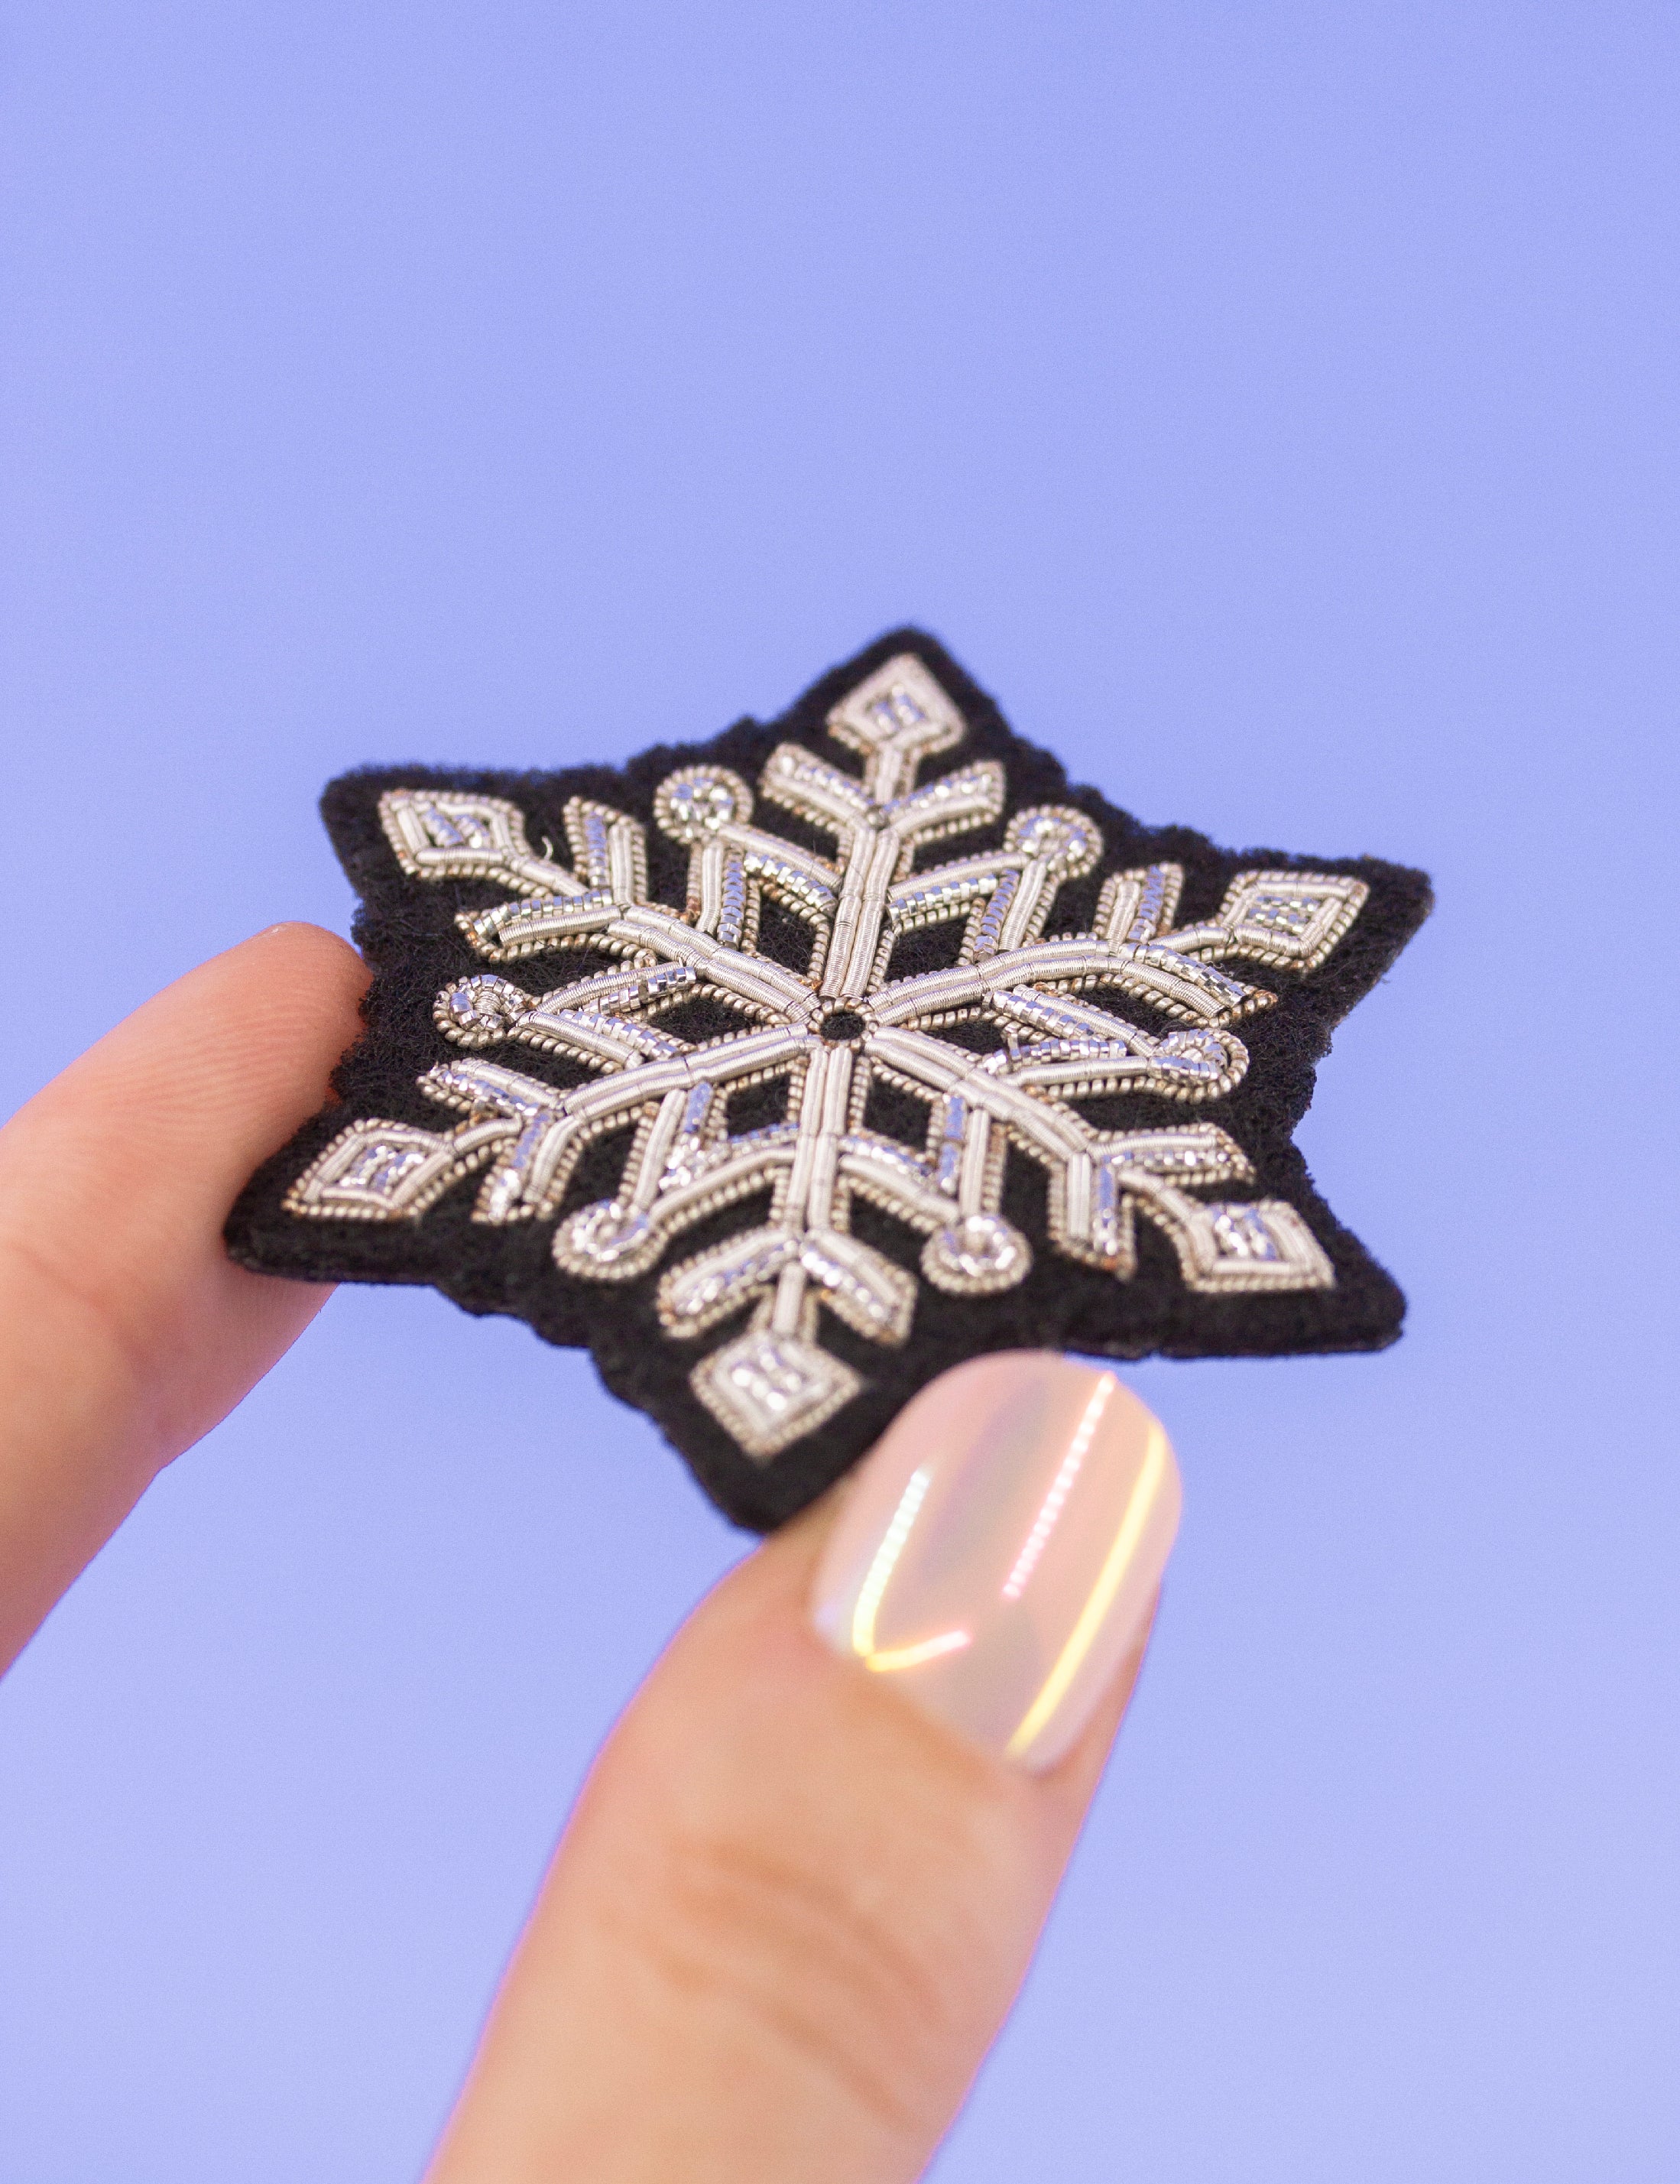 Snowflake Hand made Brooch